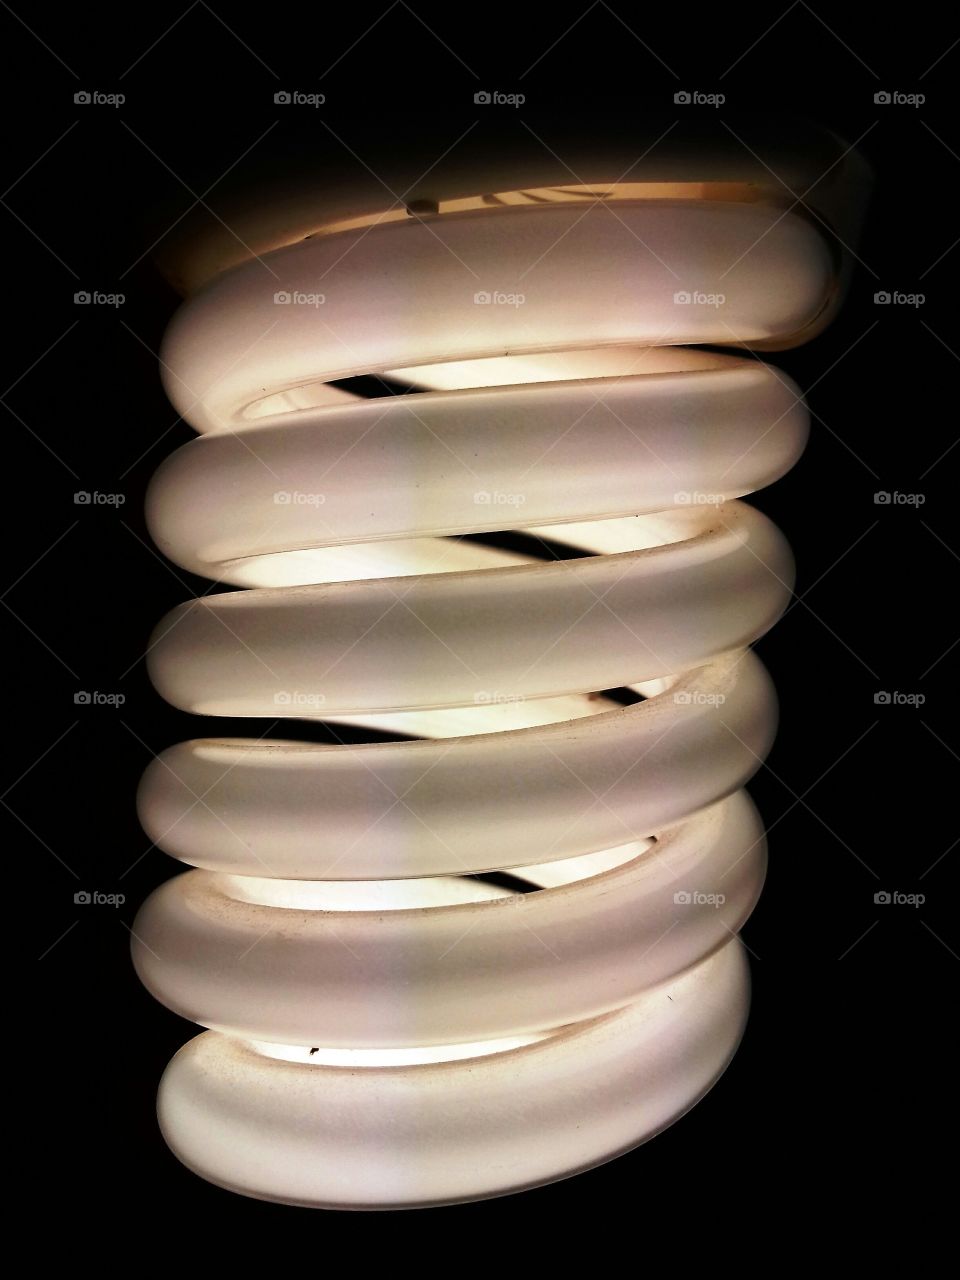 Spiral energy saving light lamp bulb on dark background